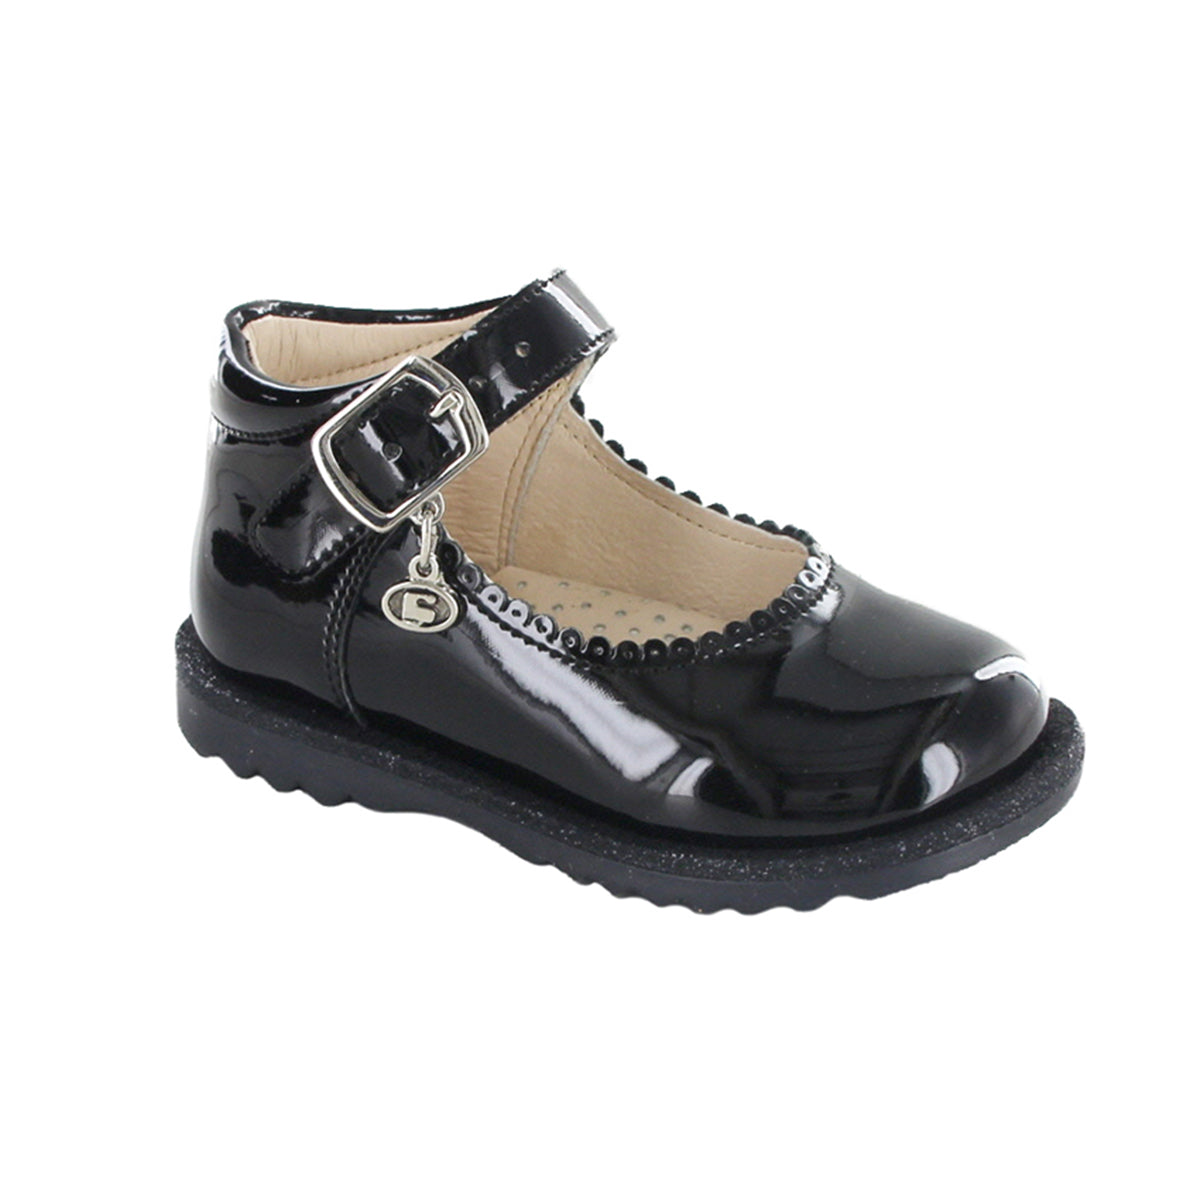 Pakar.com - Mayo: Regalos para mamá | Zapato para niña cod-102520